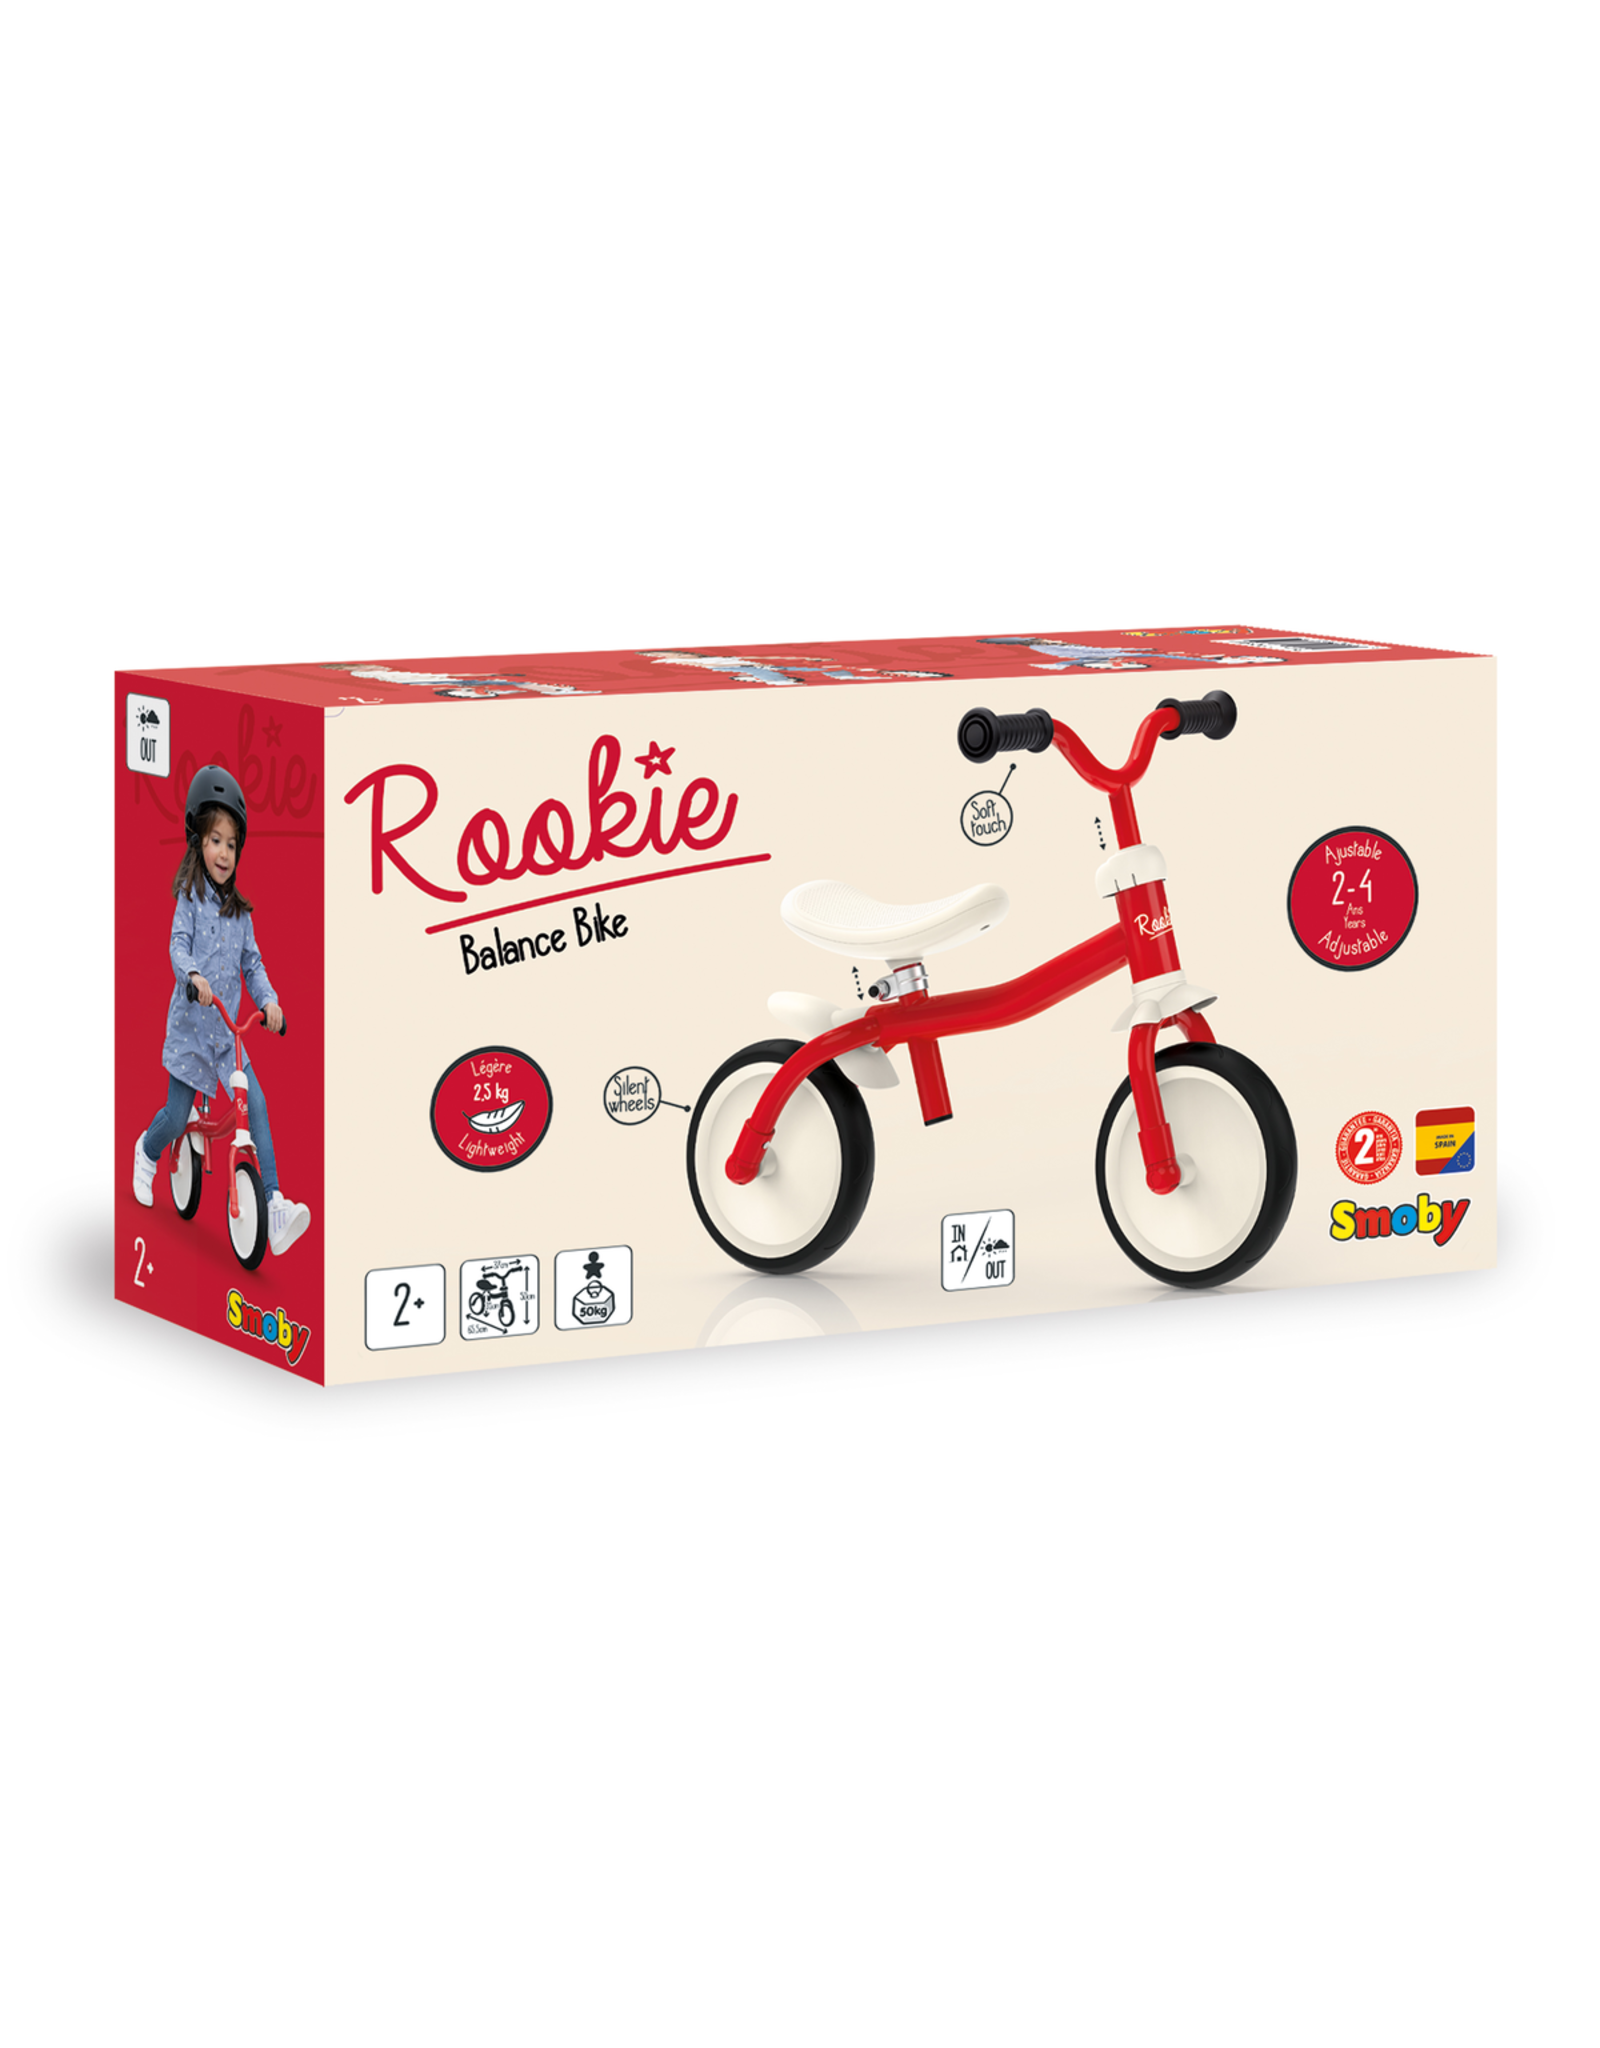 Smoby Smoby Rookie balance bike